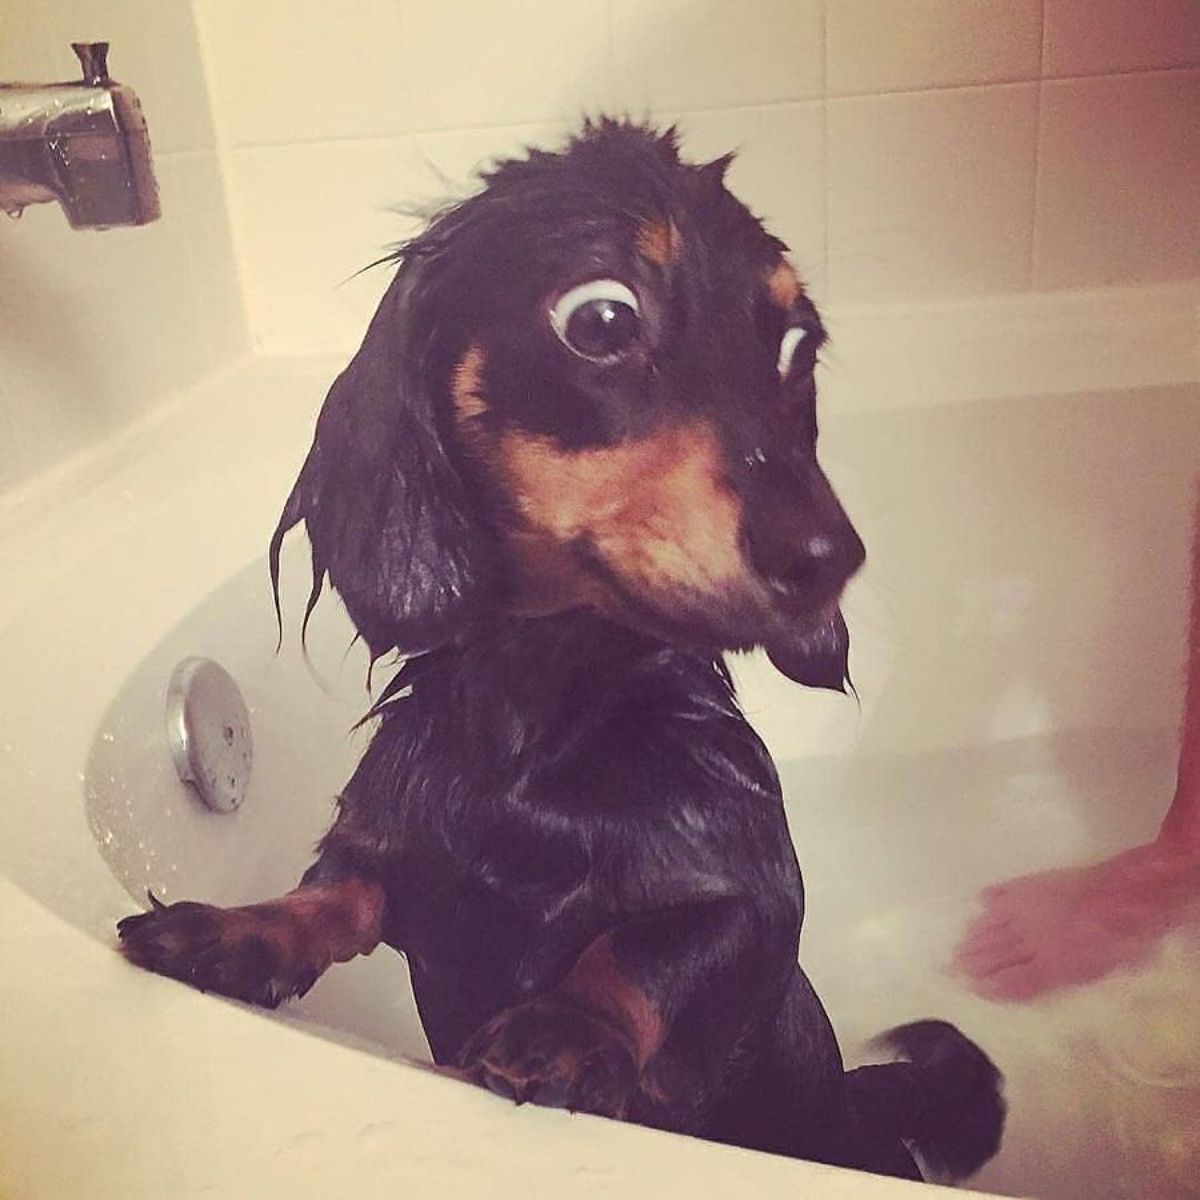 wet brown dachshund in a bathtub looking alarmed